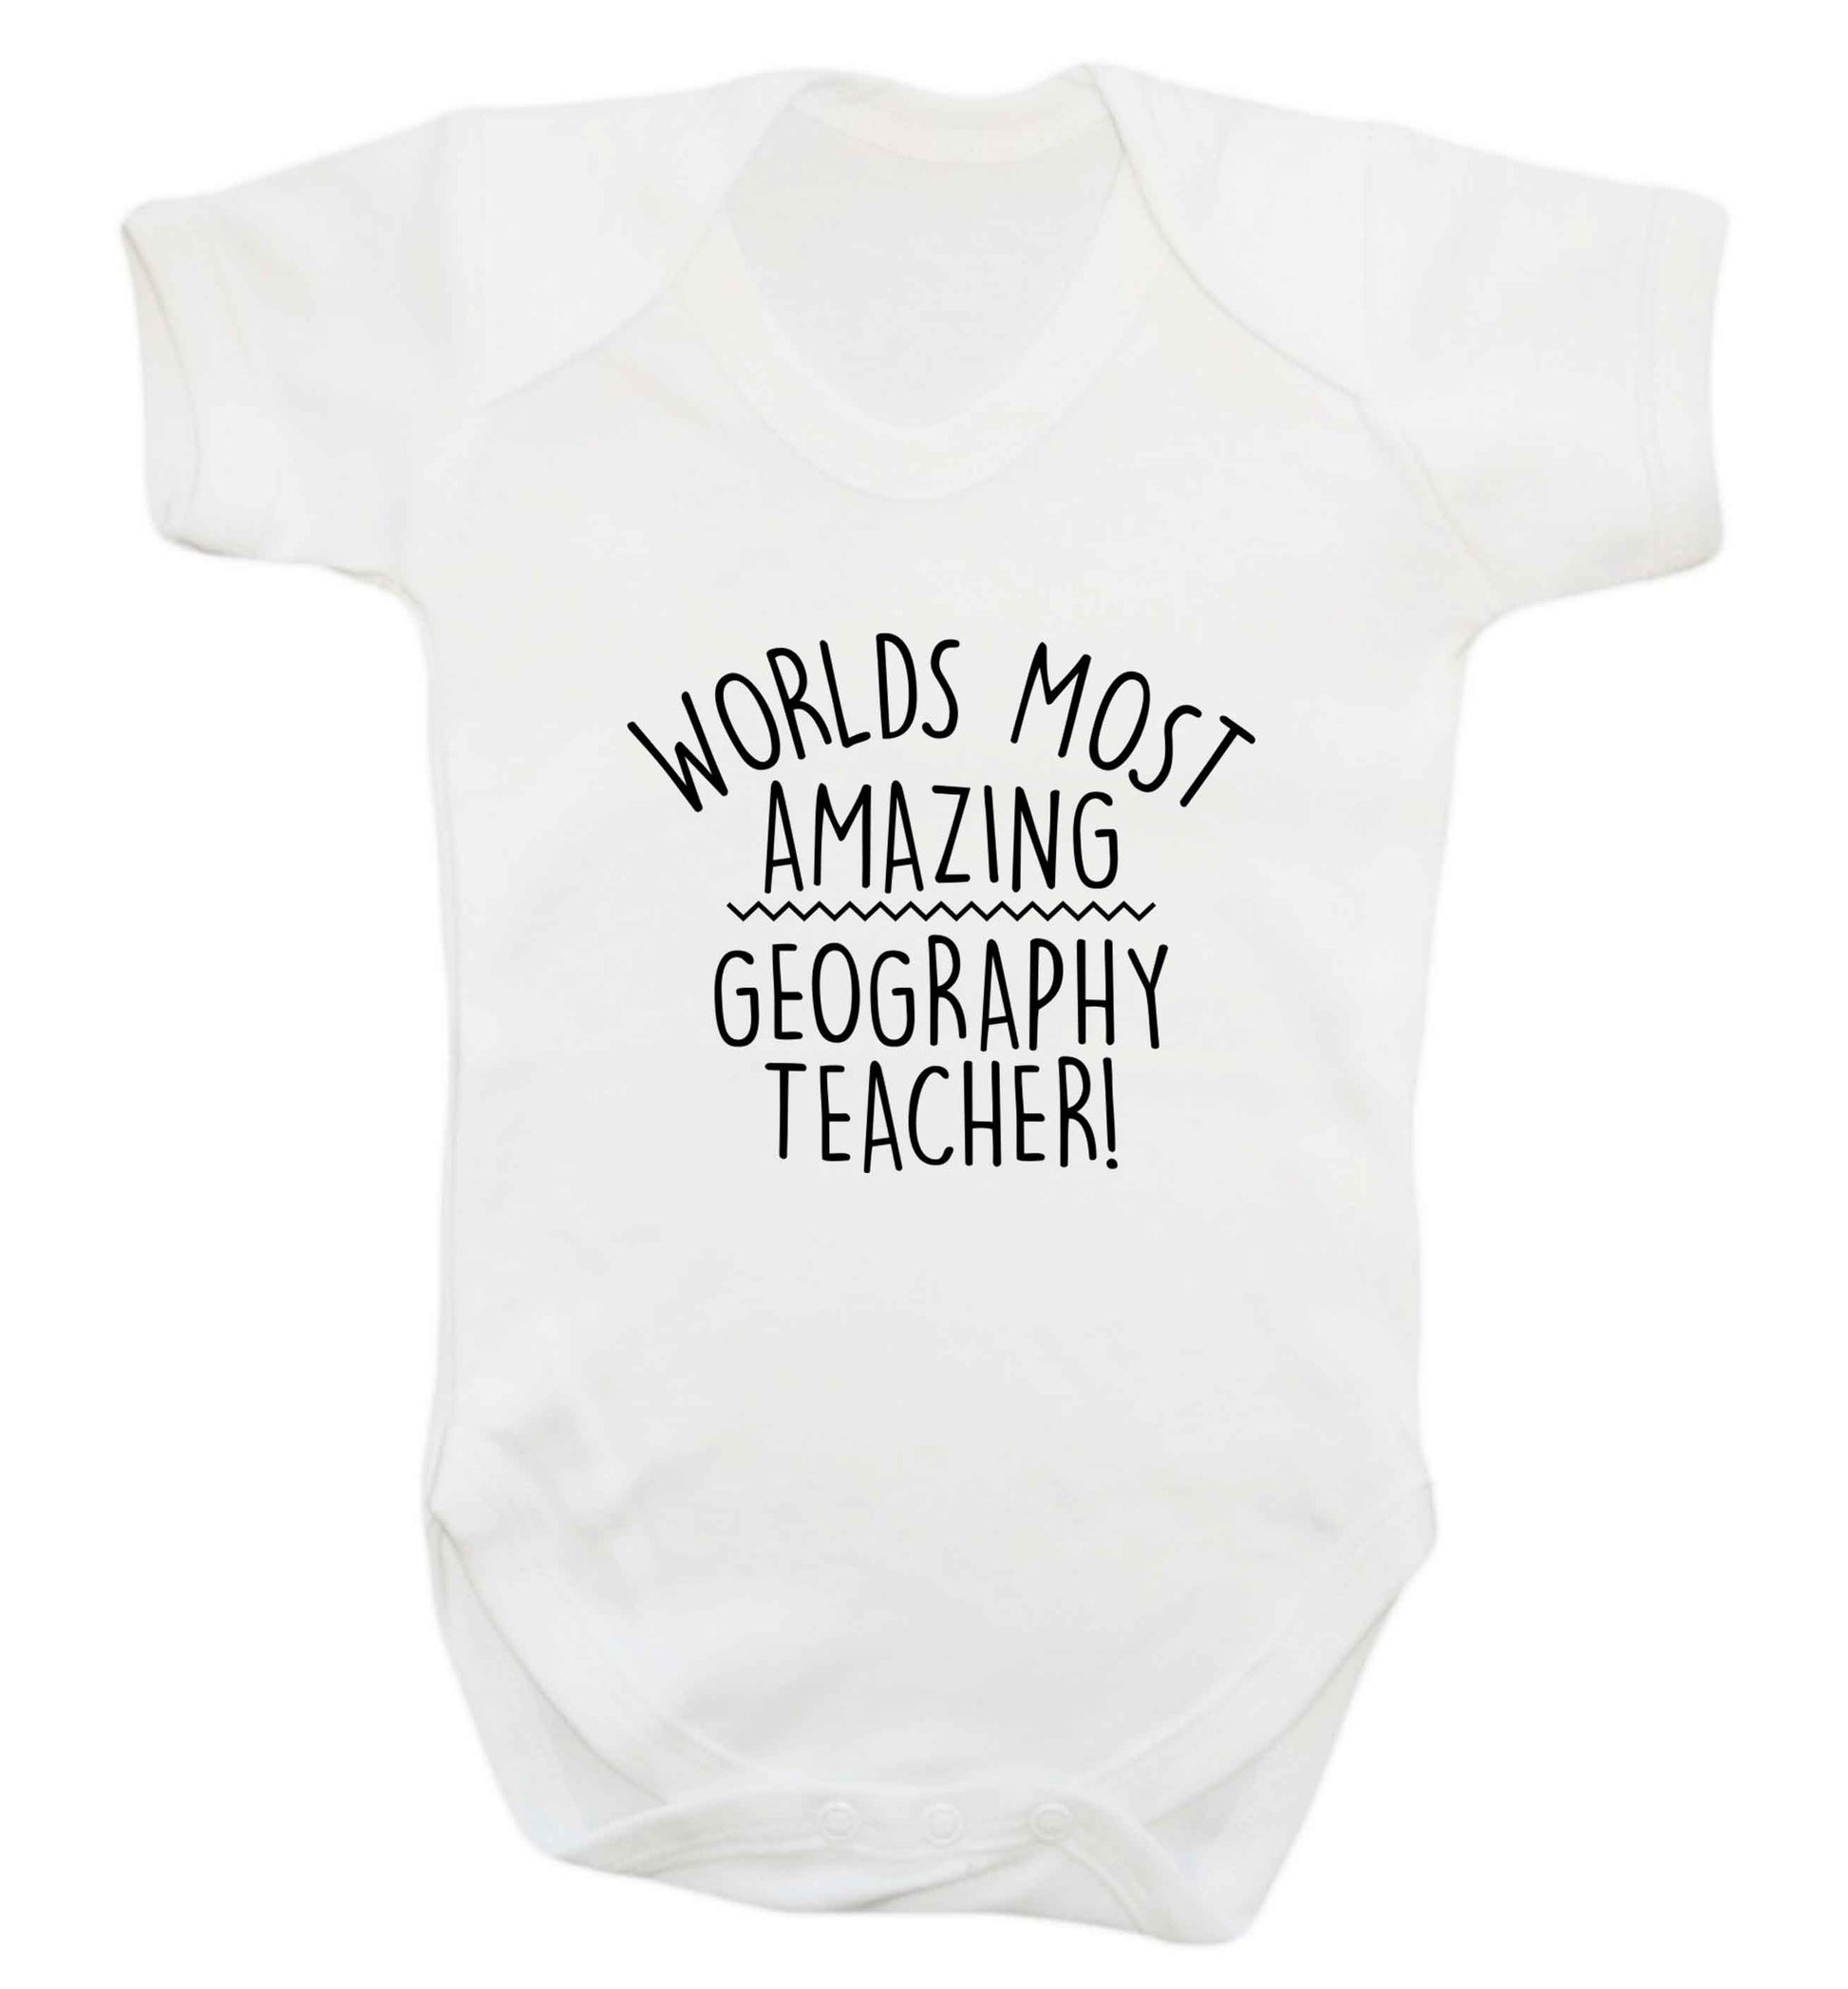 Worlds most amazing geography teacher baby vest white 18-24 months